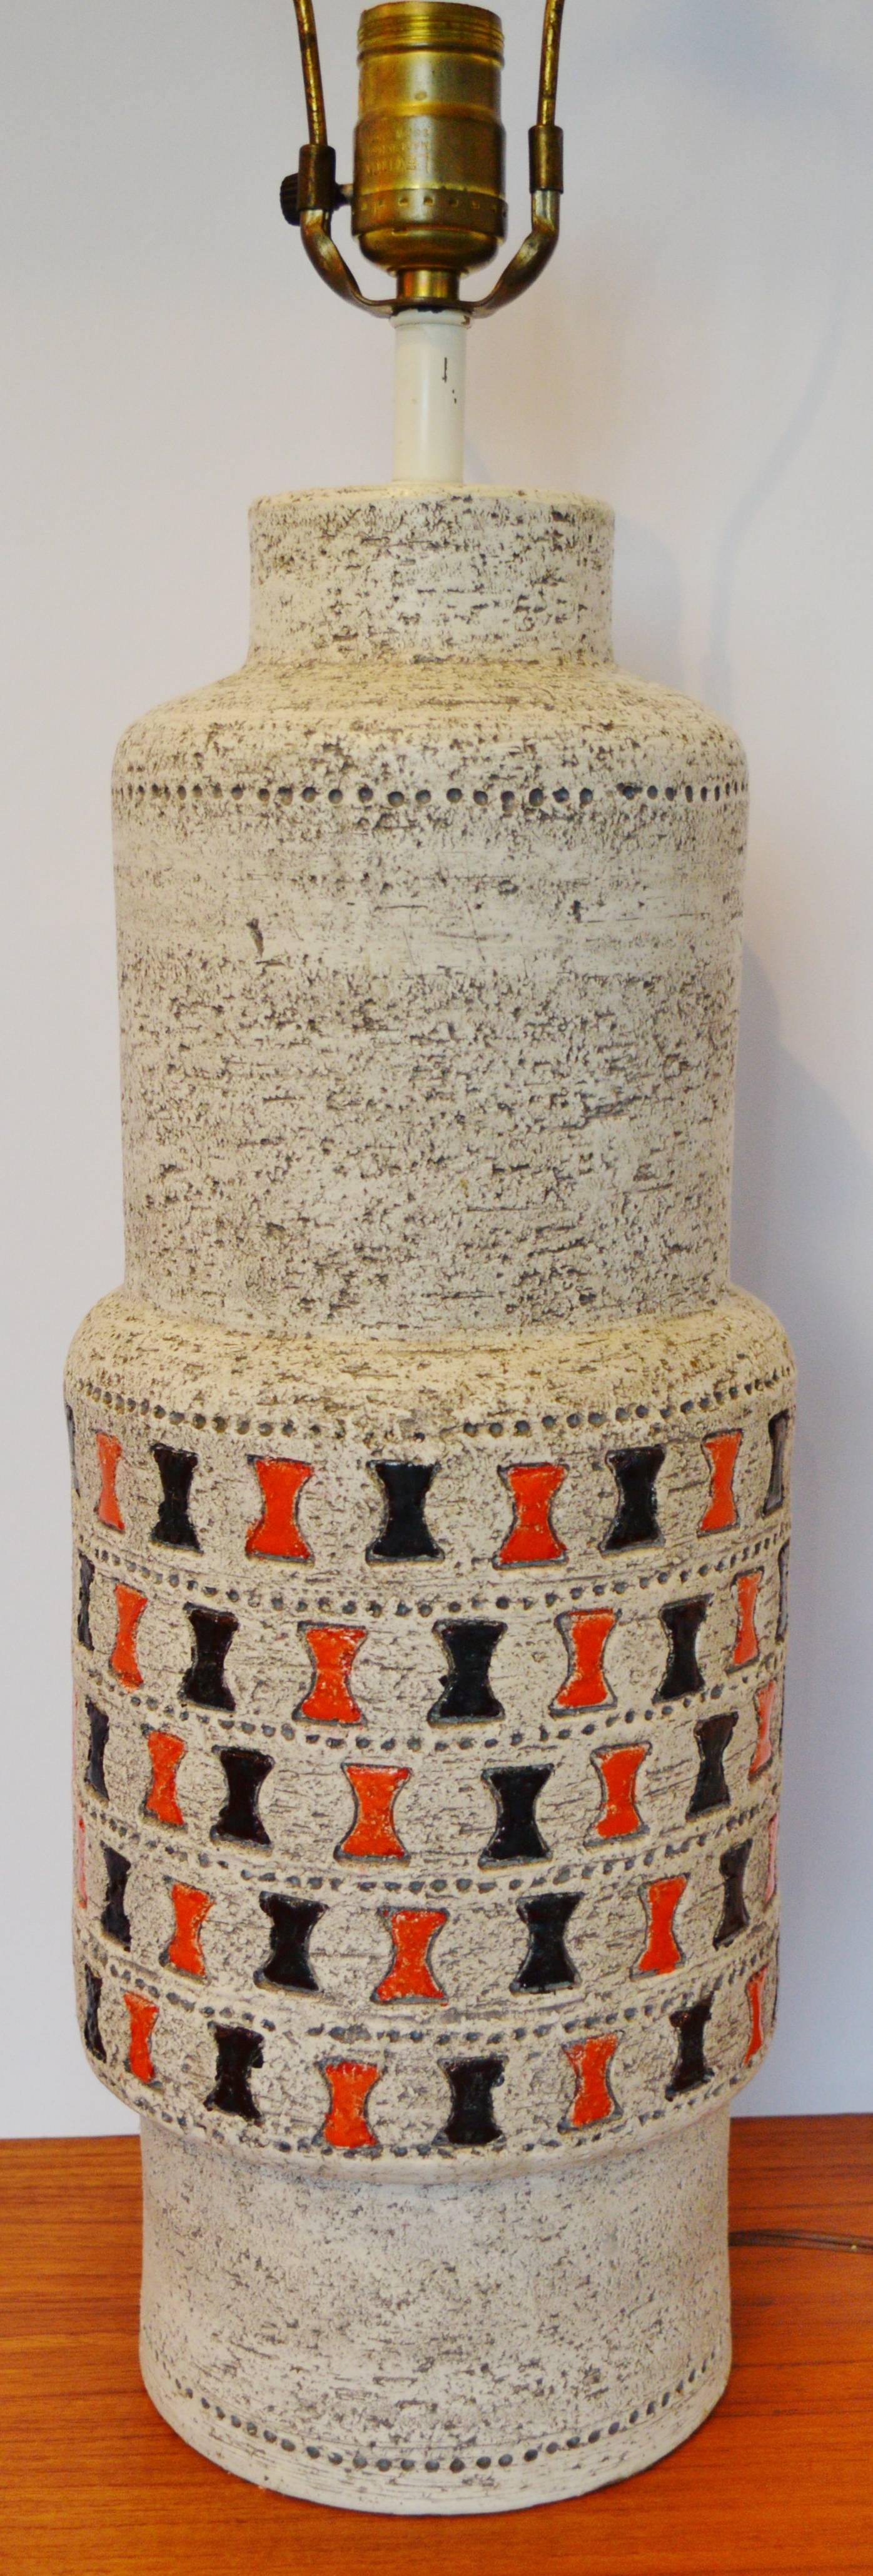 Mid-Century Modern Large Bitossi Organic Ceramic Lamp Orange & Black on Cream